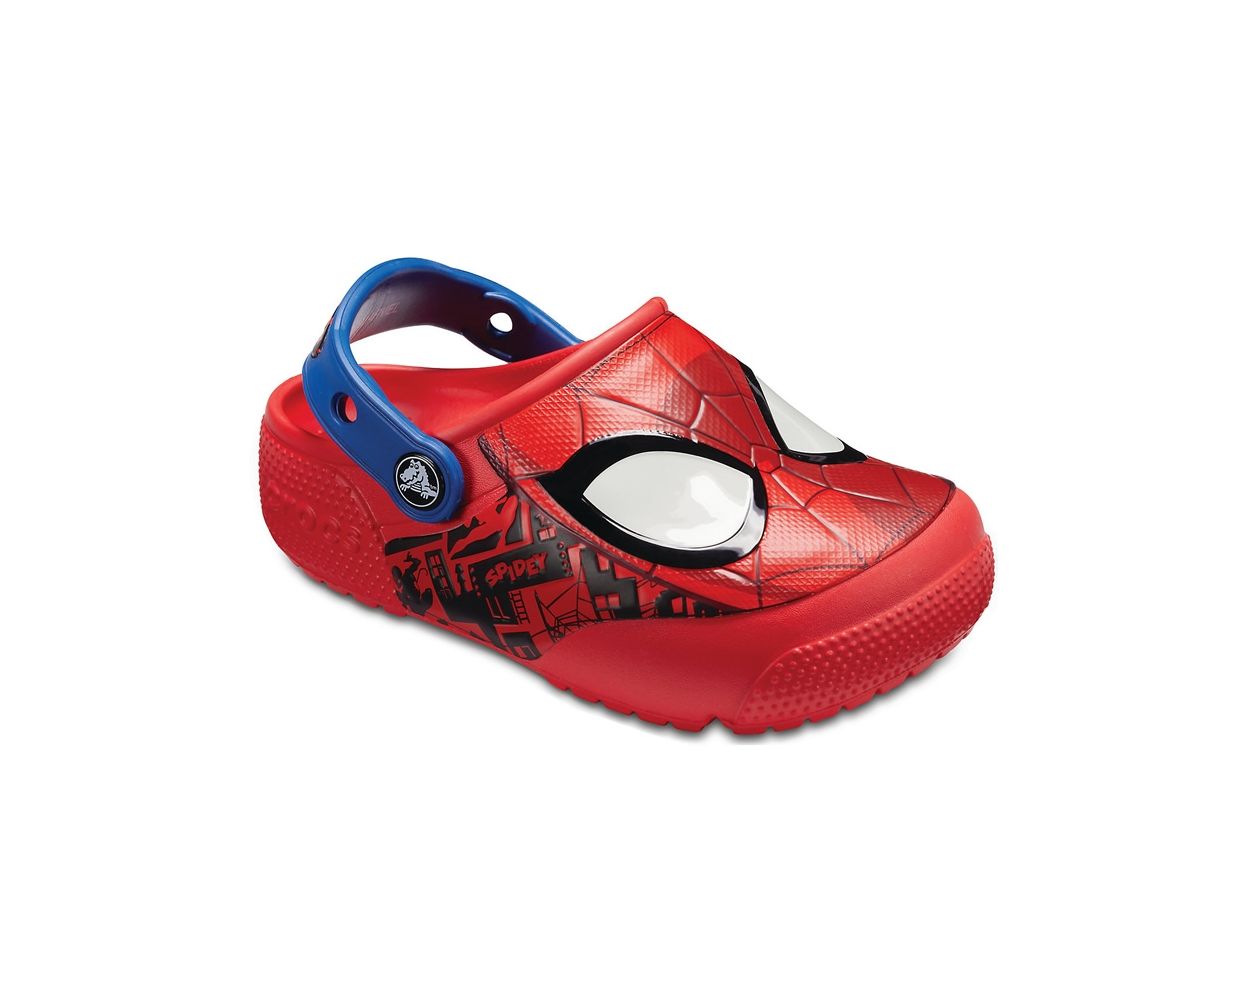 AND THEY GLOW??? #fyp #spiderman #crocs #spidermancrocs